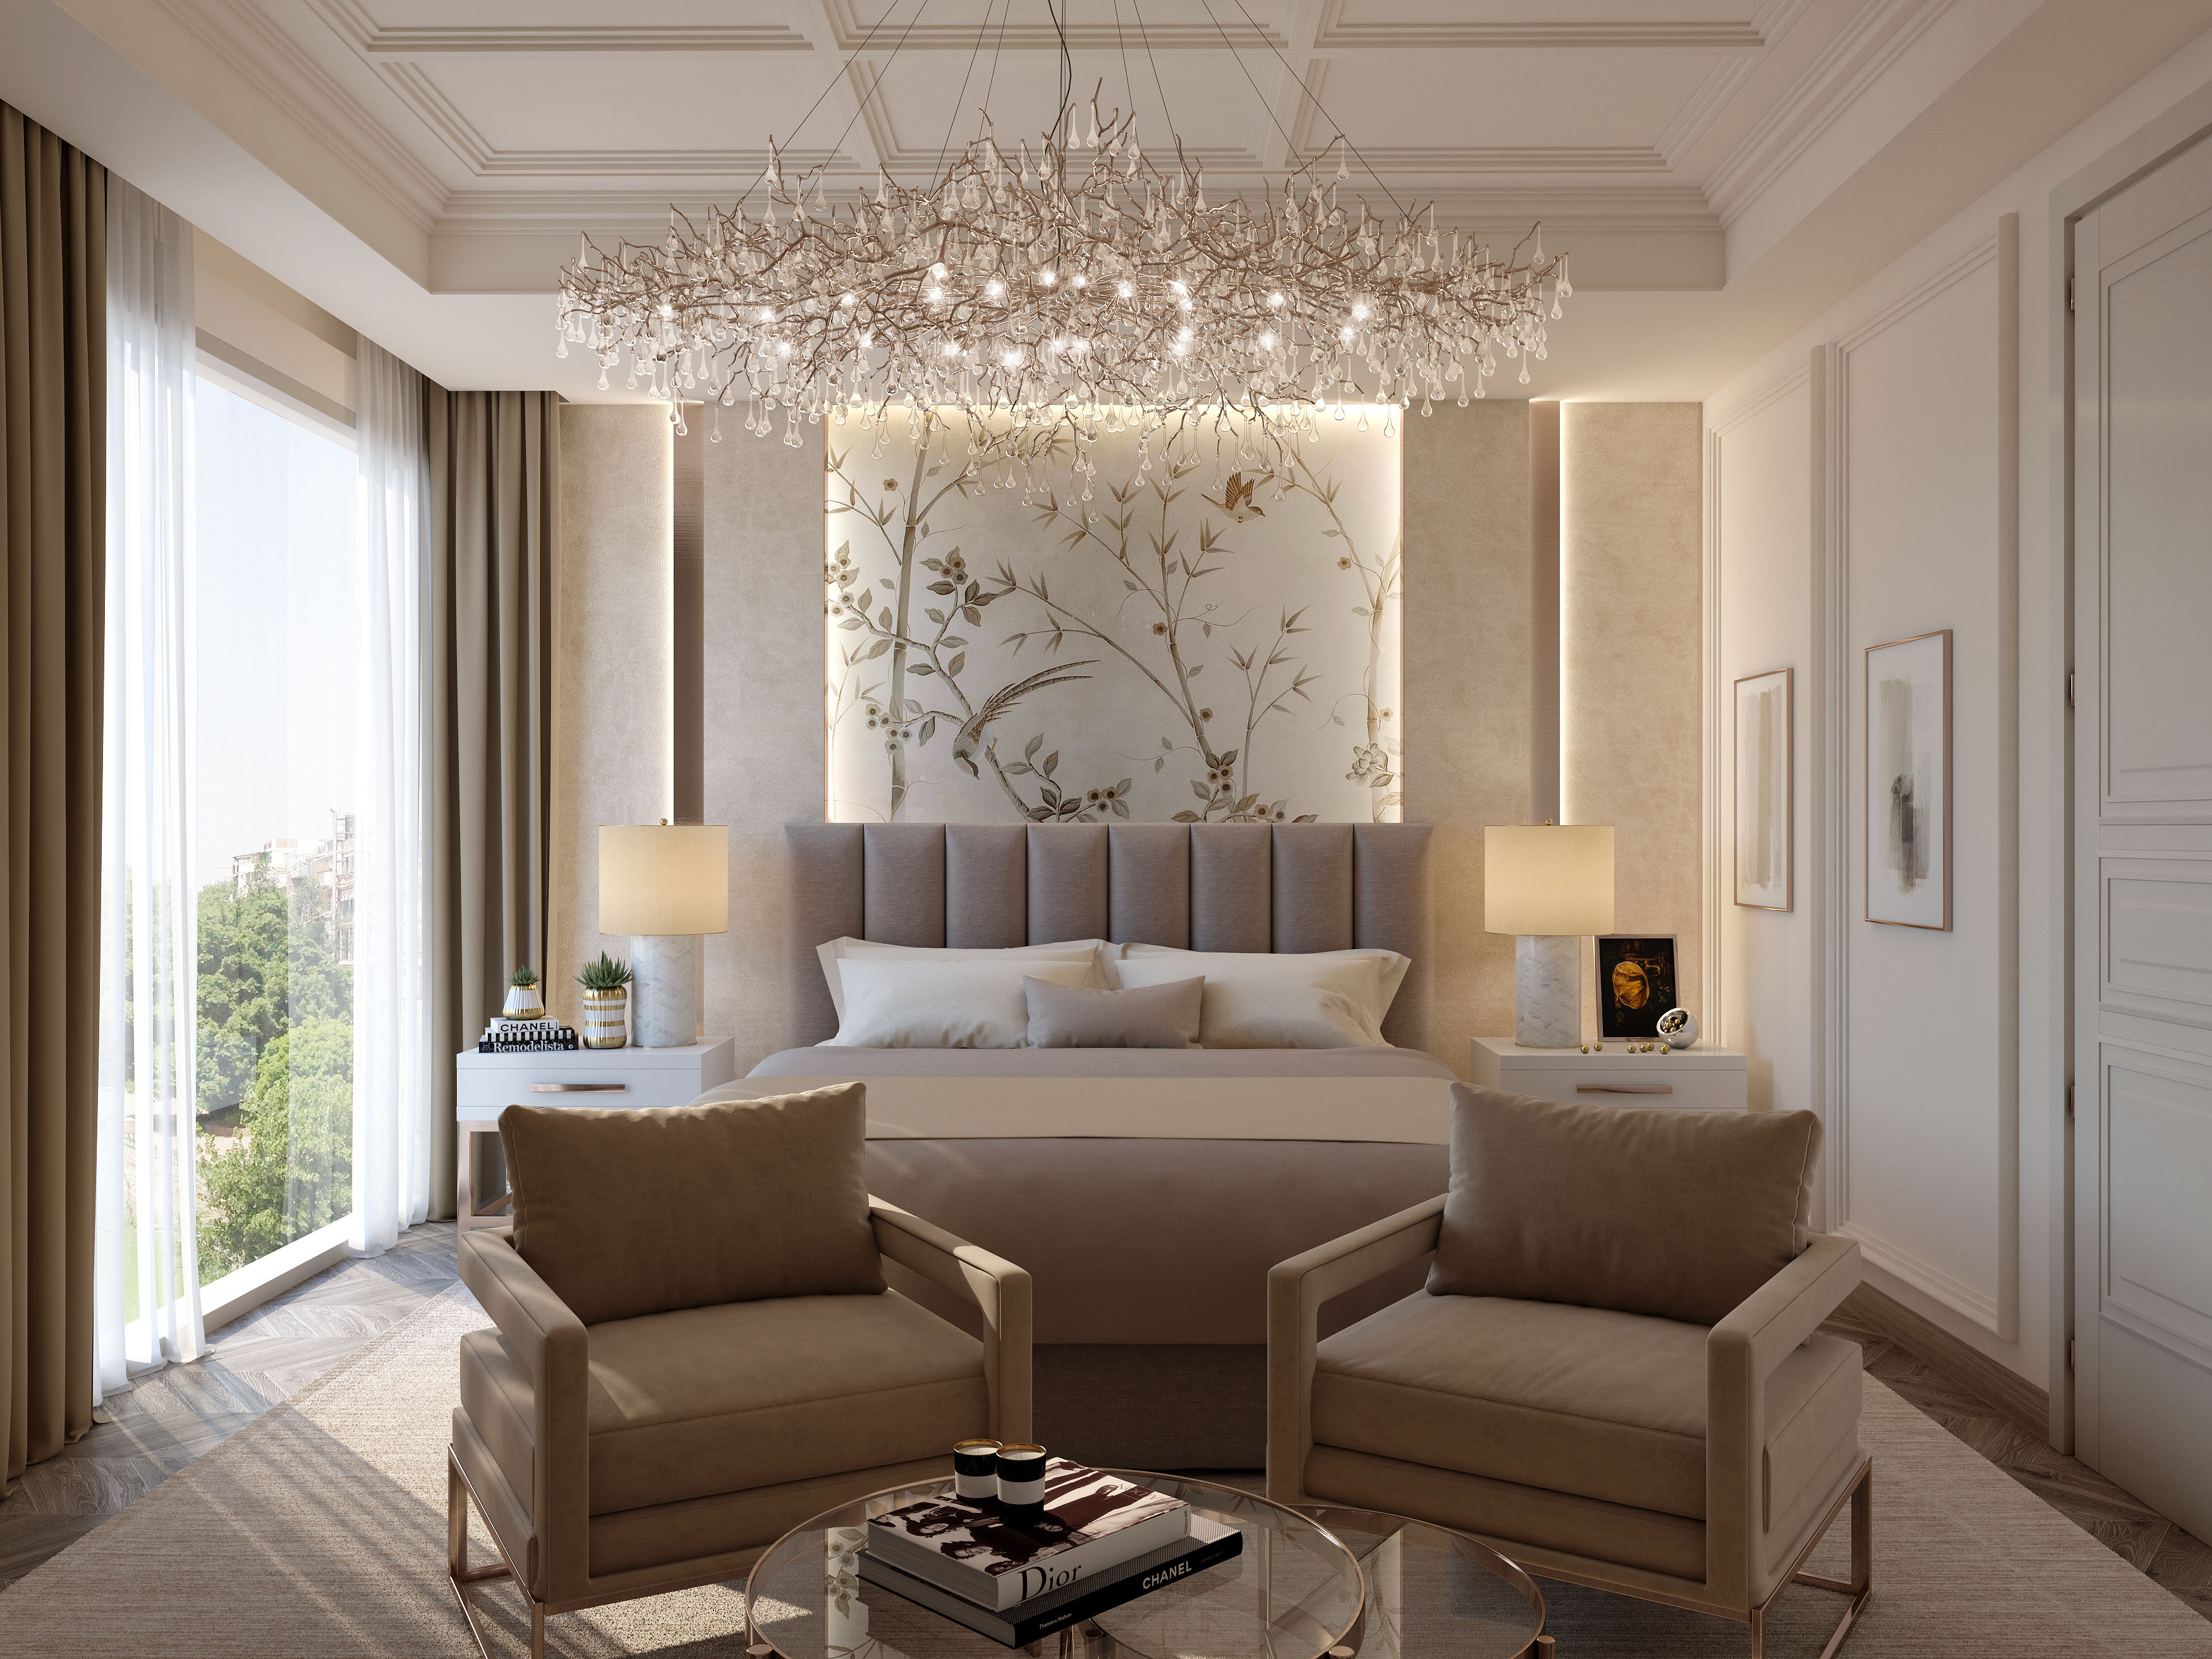 Aparna Kaushik presents Exquisite Bedrooms